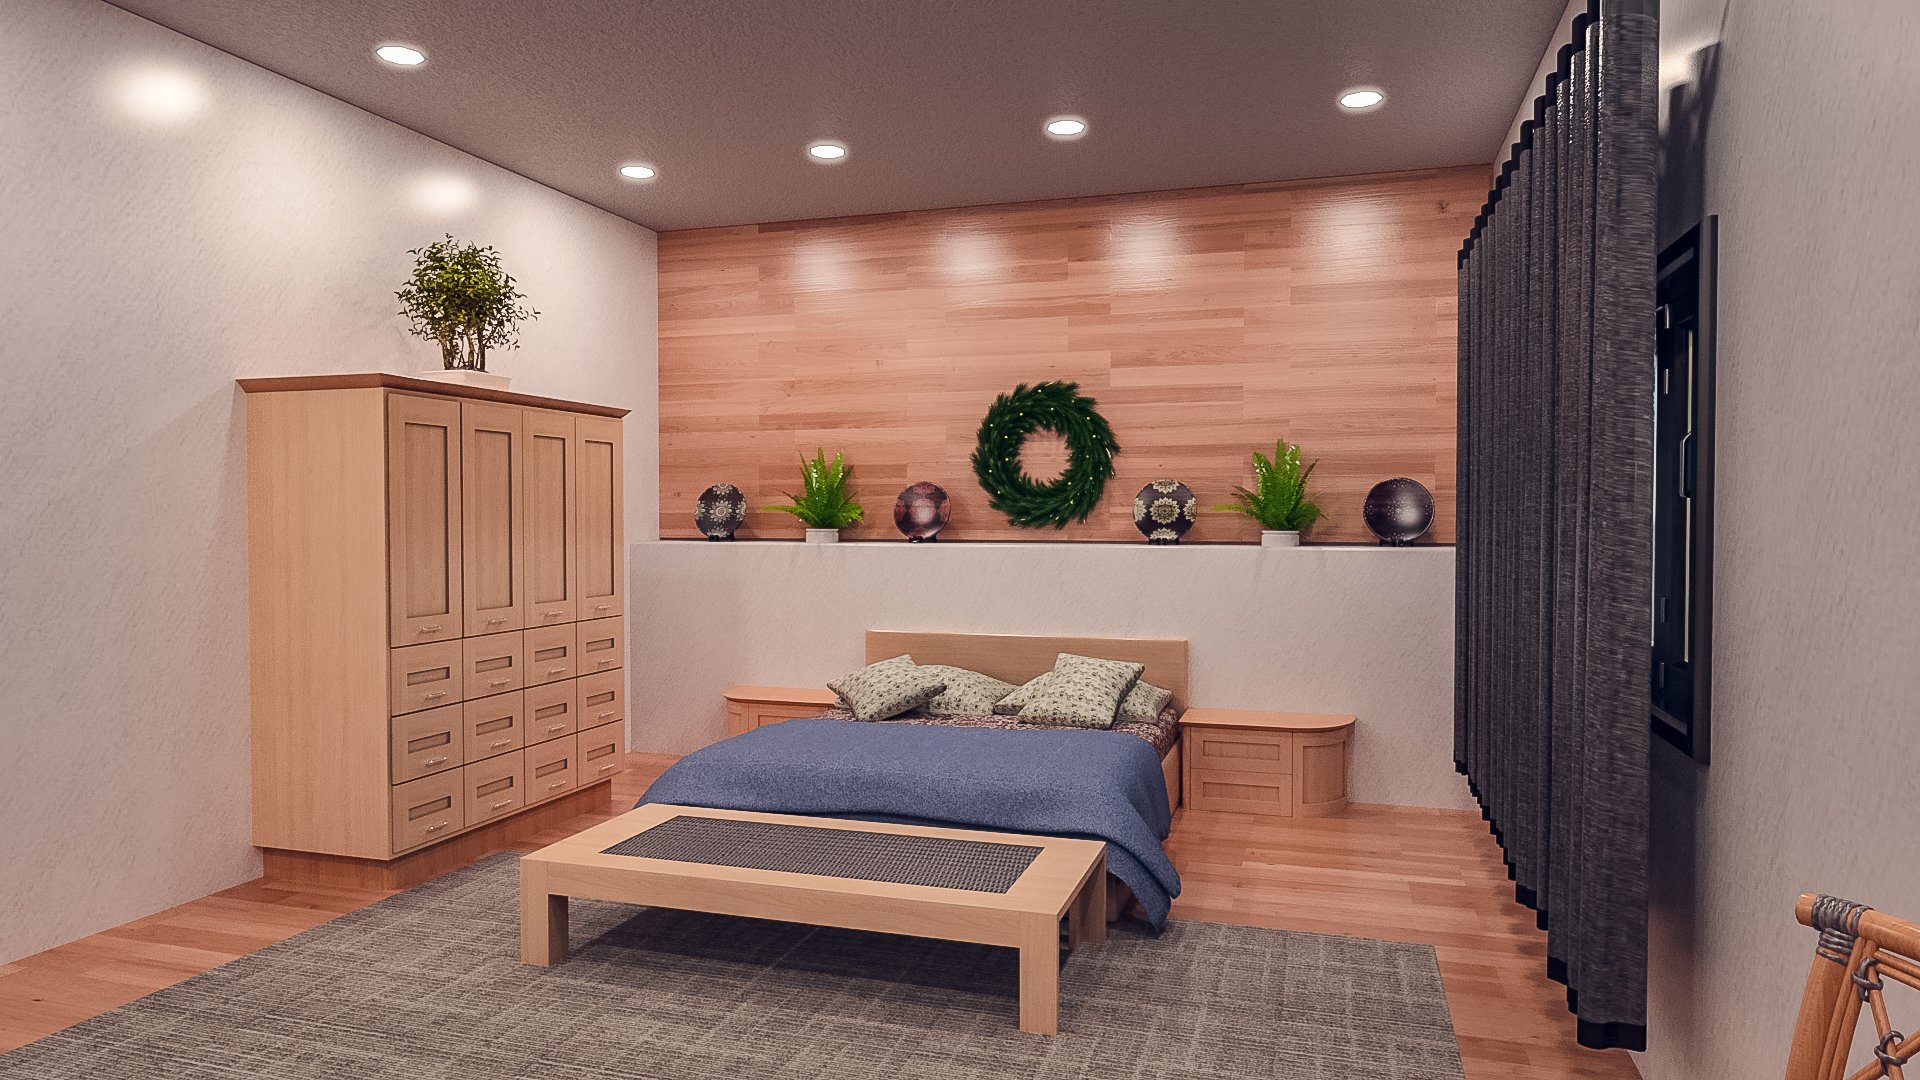 Spring Bedroom by: Tesla3dCorp, 3D Models by Daz 3D